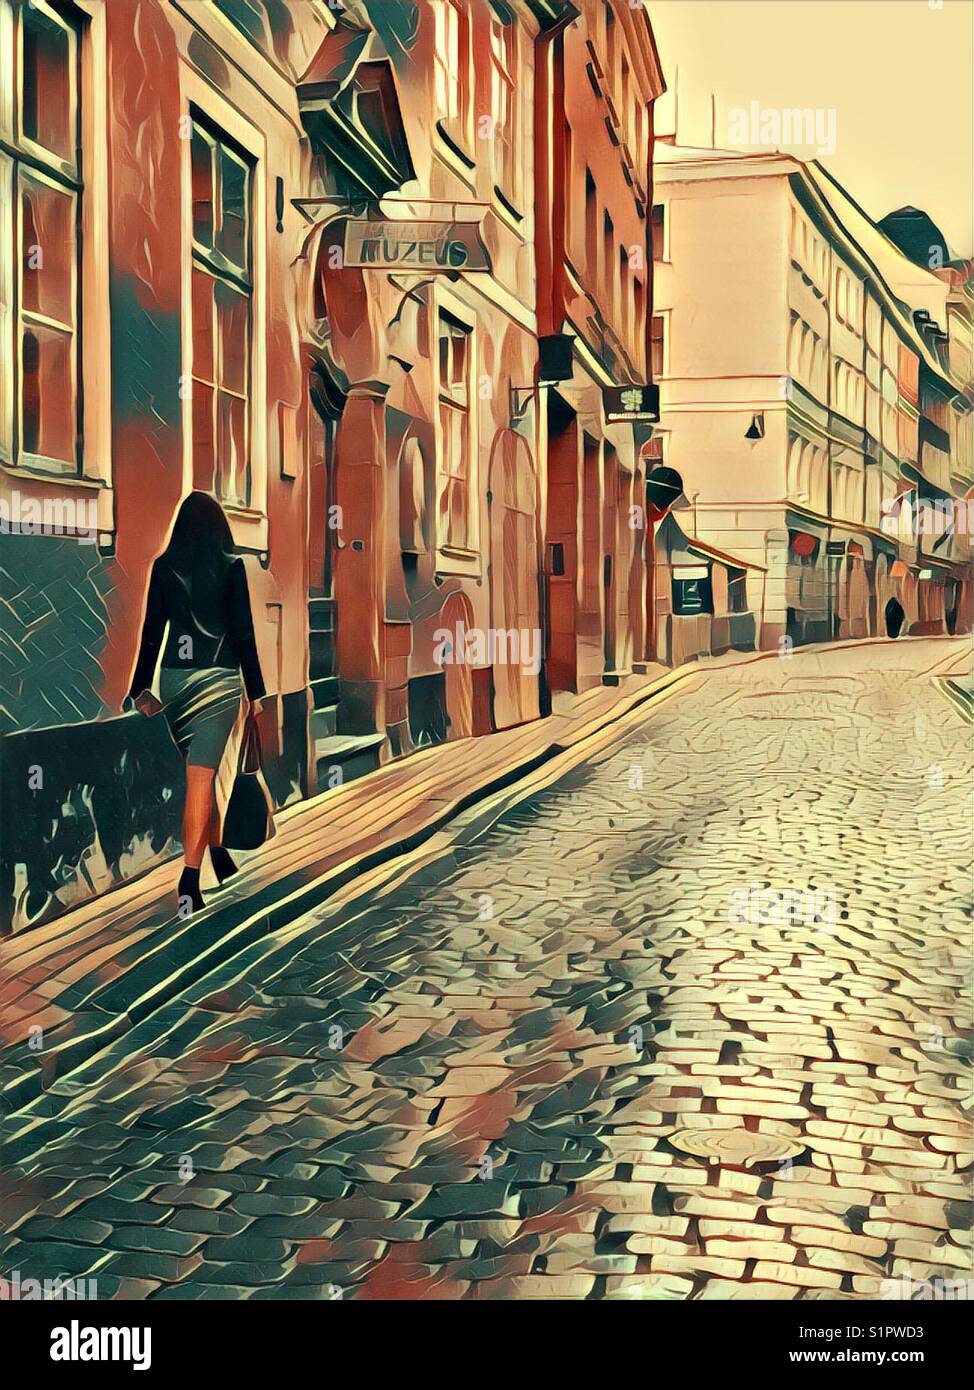 Illustration of woman walking down a european street Stock Photo